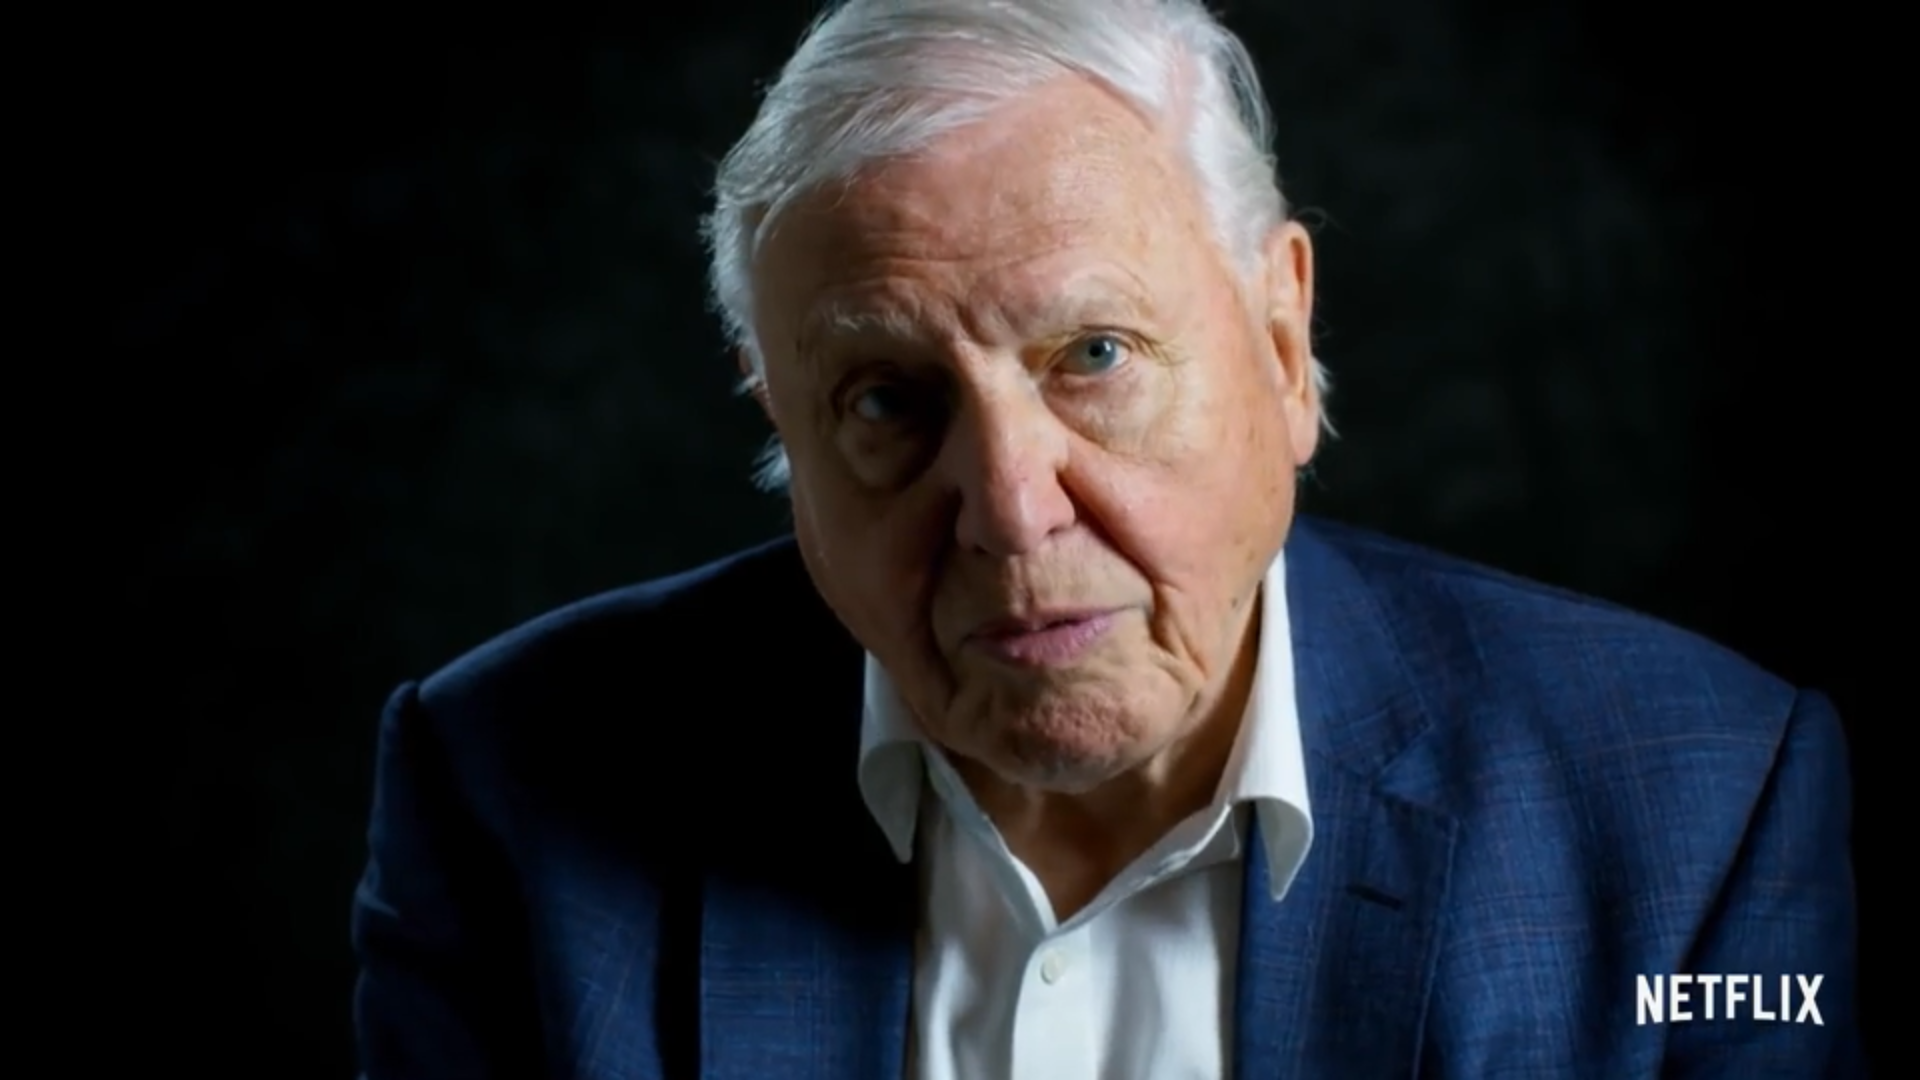 What is David Attenborough’s Net Worth?